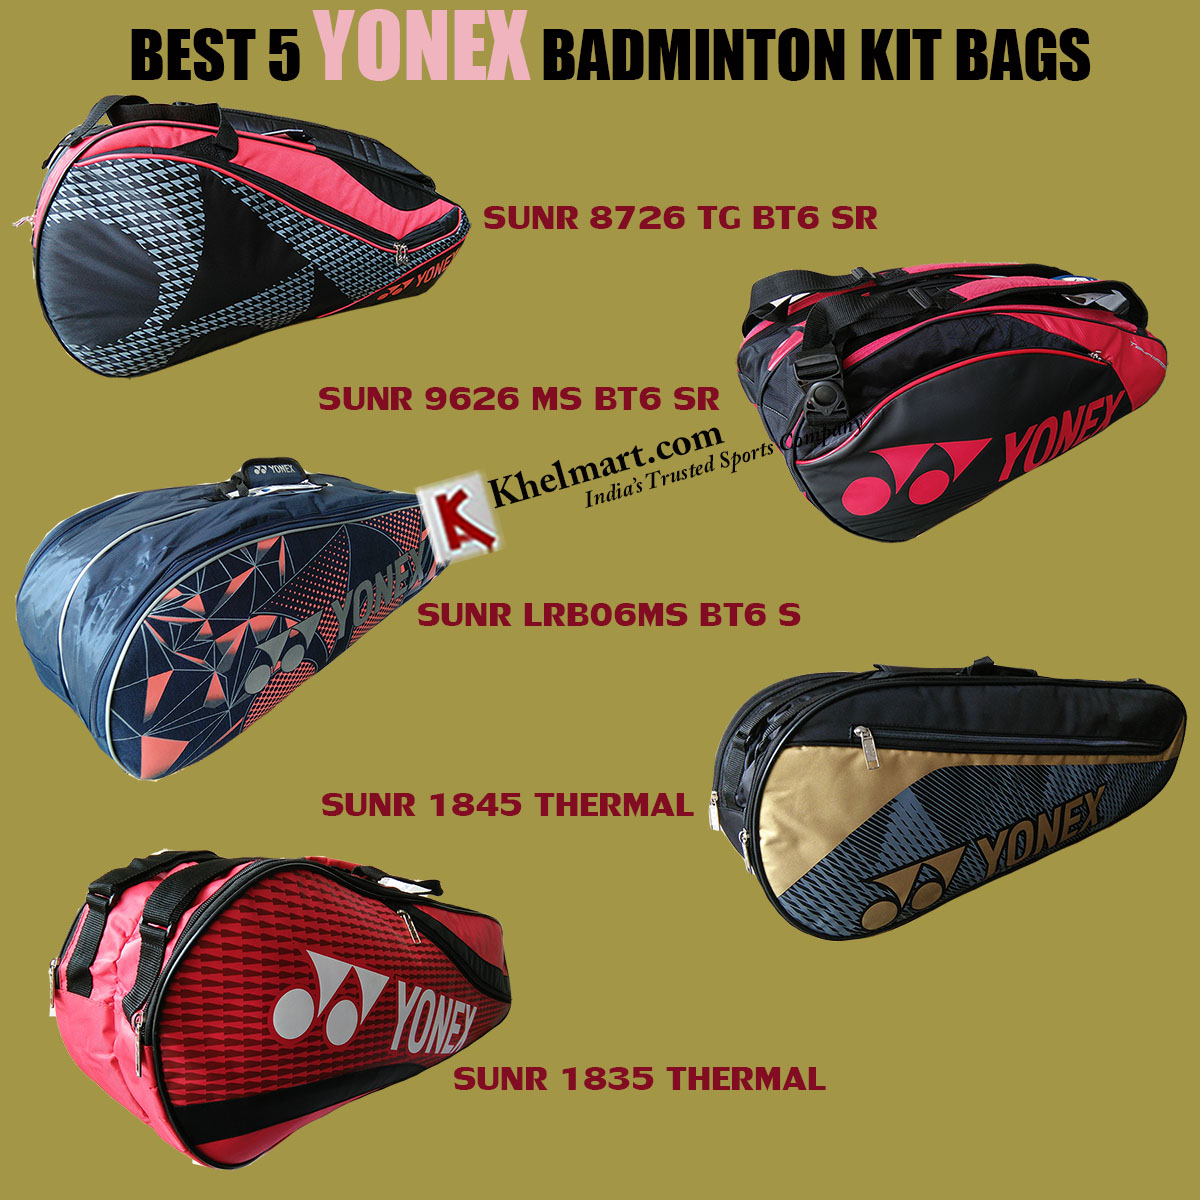 Best_5_Yonex_badminton_kit_bags.jpg